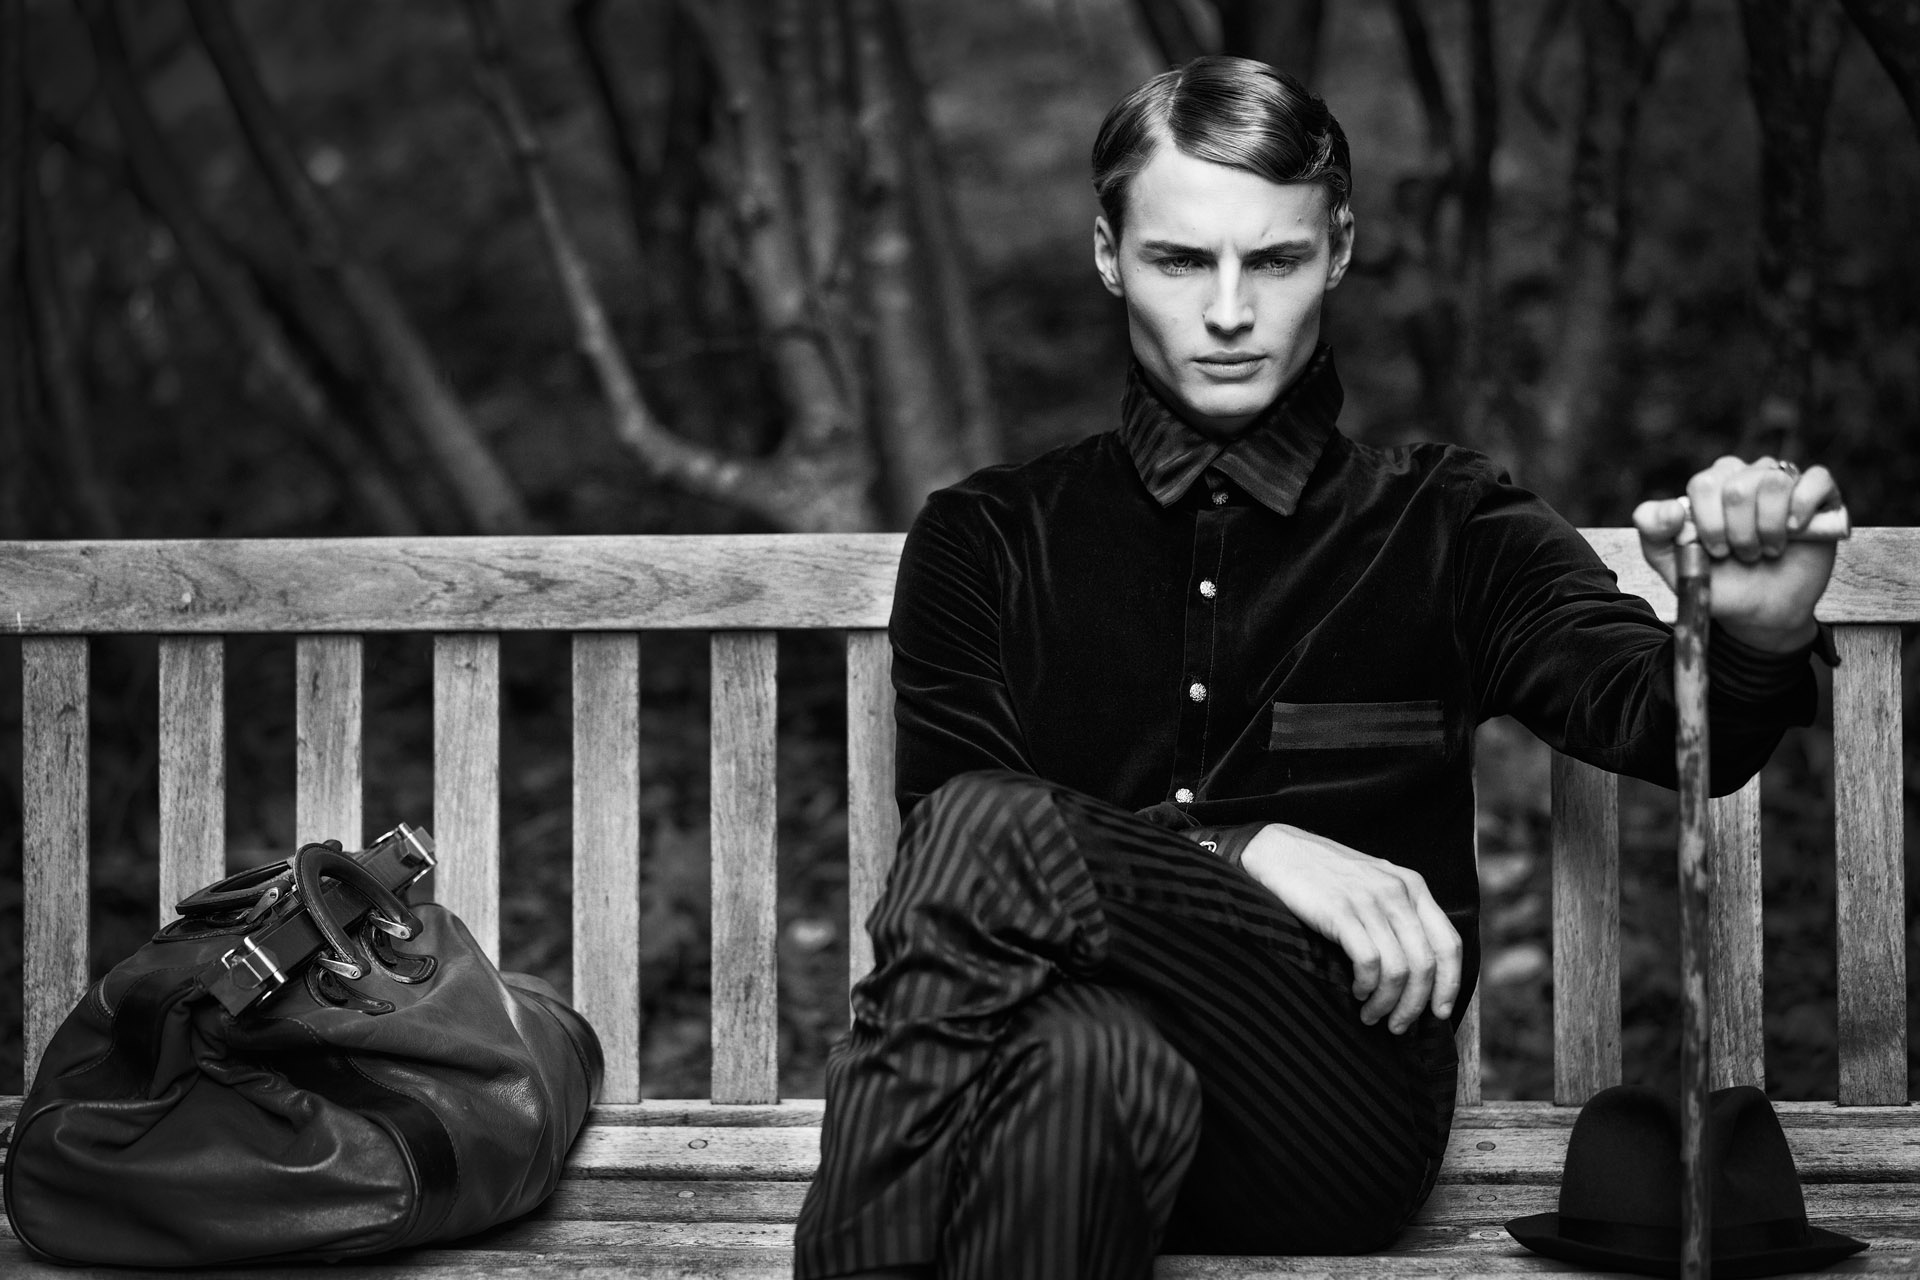 modell Fredrik outfit från Wendy Wheiman i äkta Gatsby style